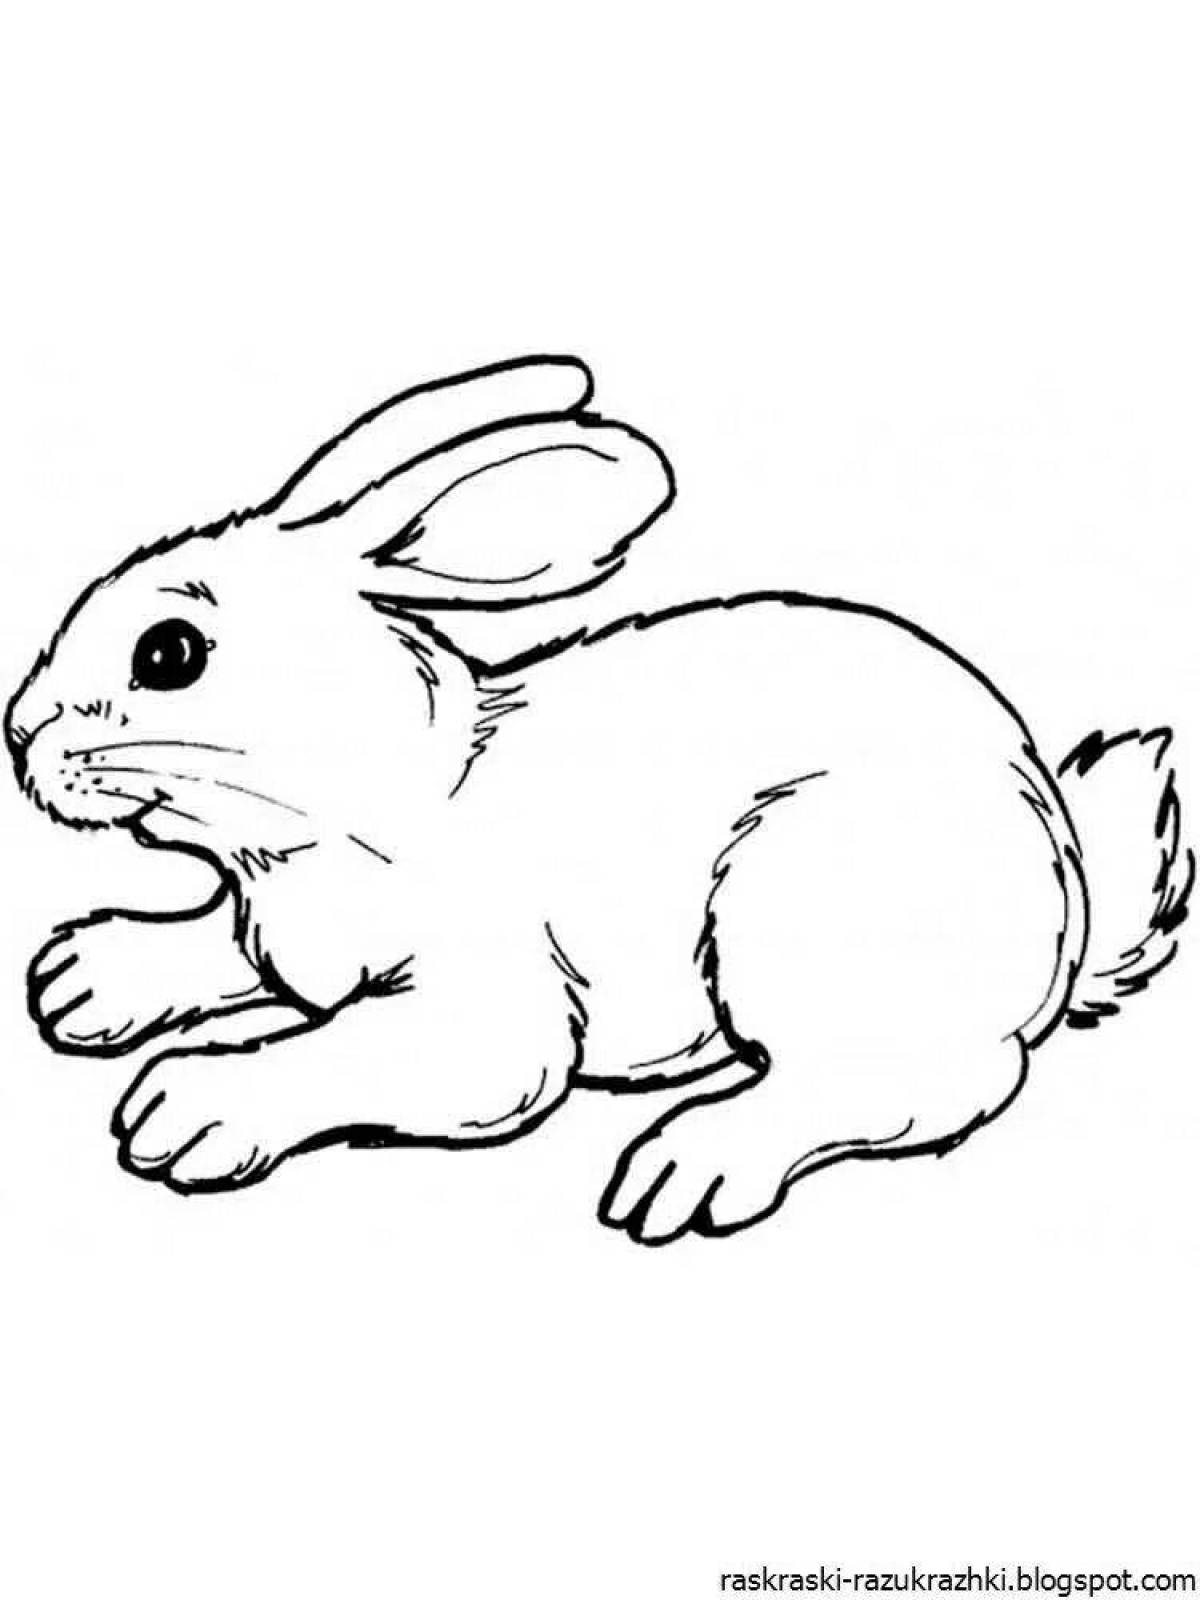 Раскраска милый заяц для детей